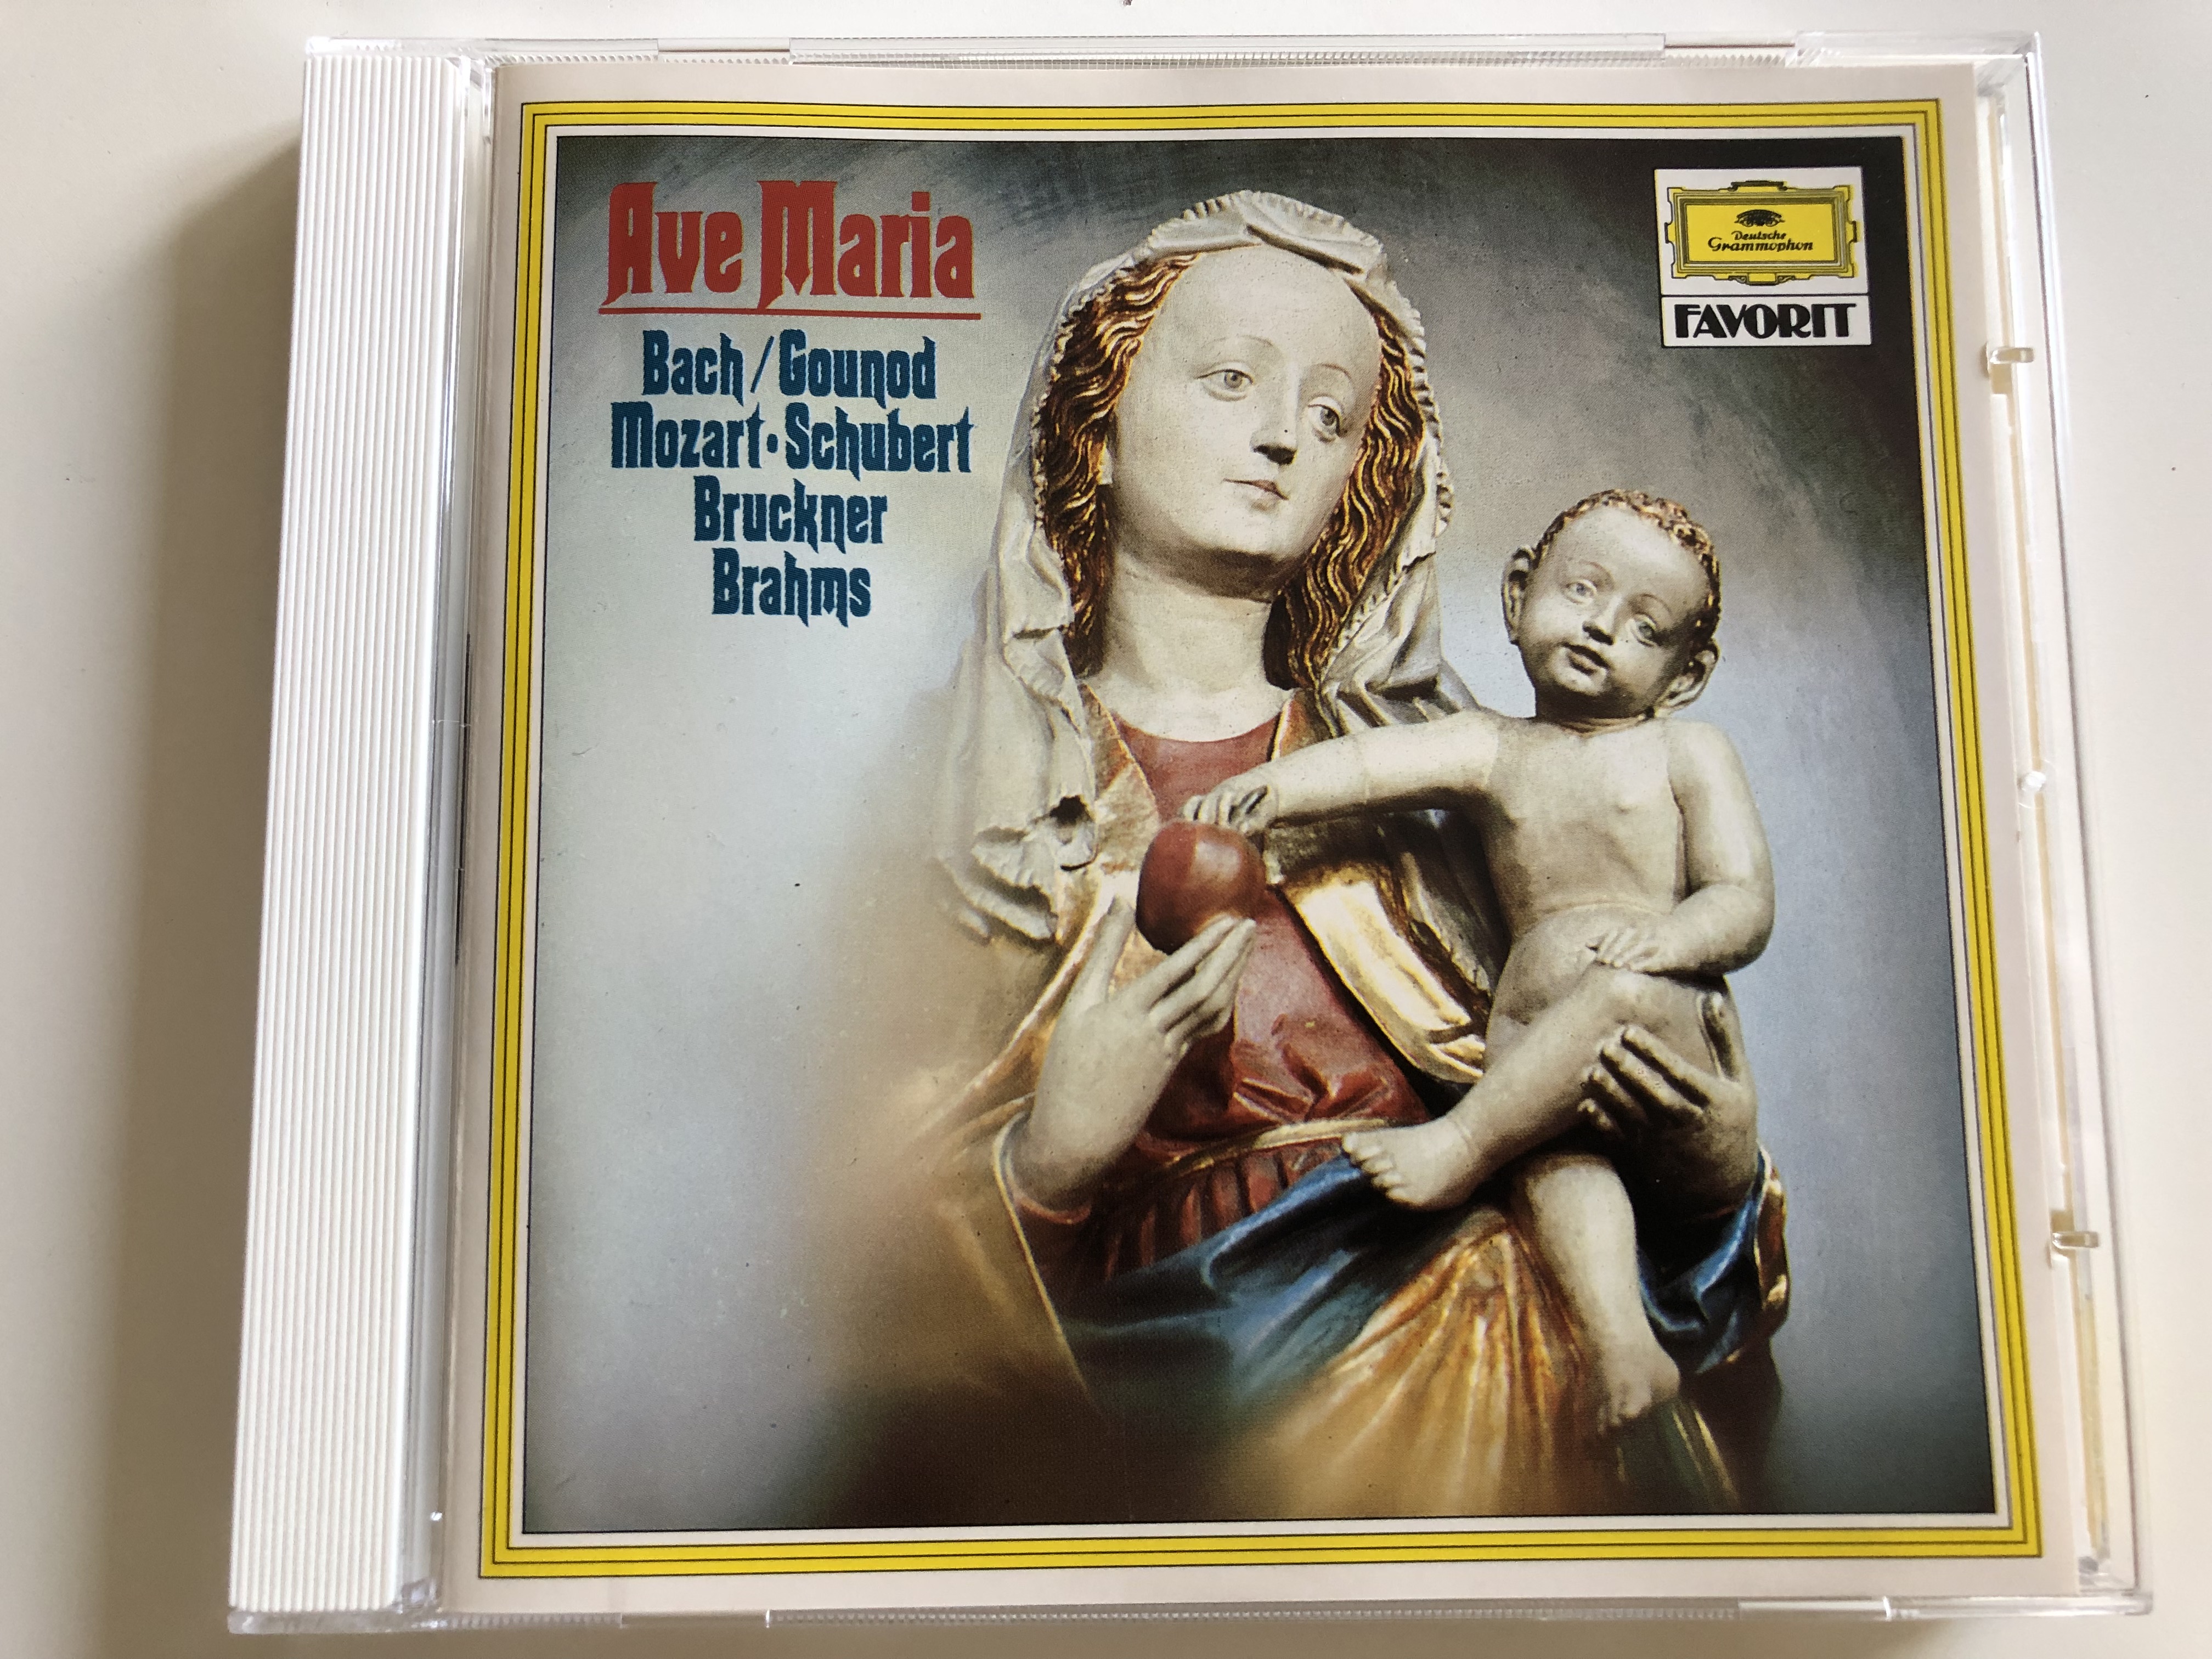 ave-maria-favorite-choruses-bach-gounod-mozart-schubert-bruckner-brahms-audio-cd-deutsche-gramophon-423777-2-1-.jpg